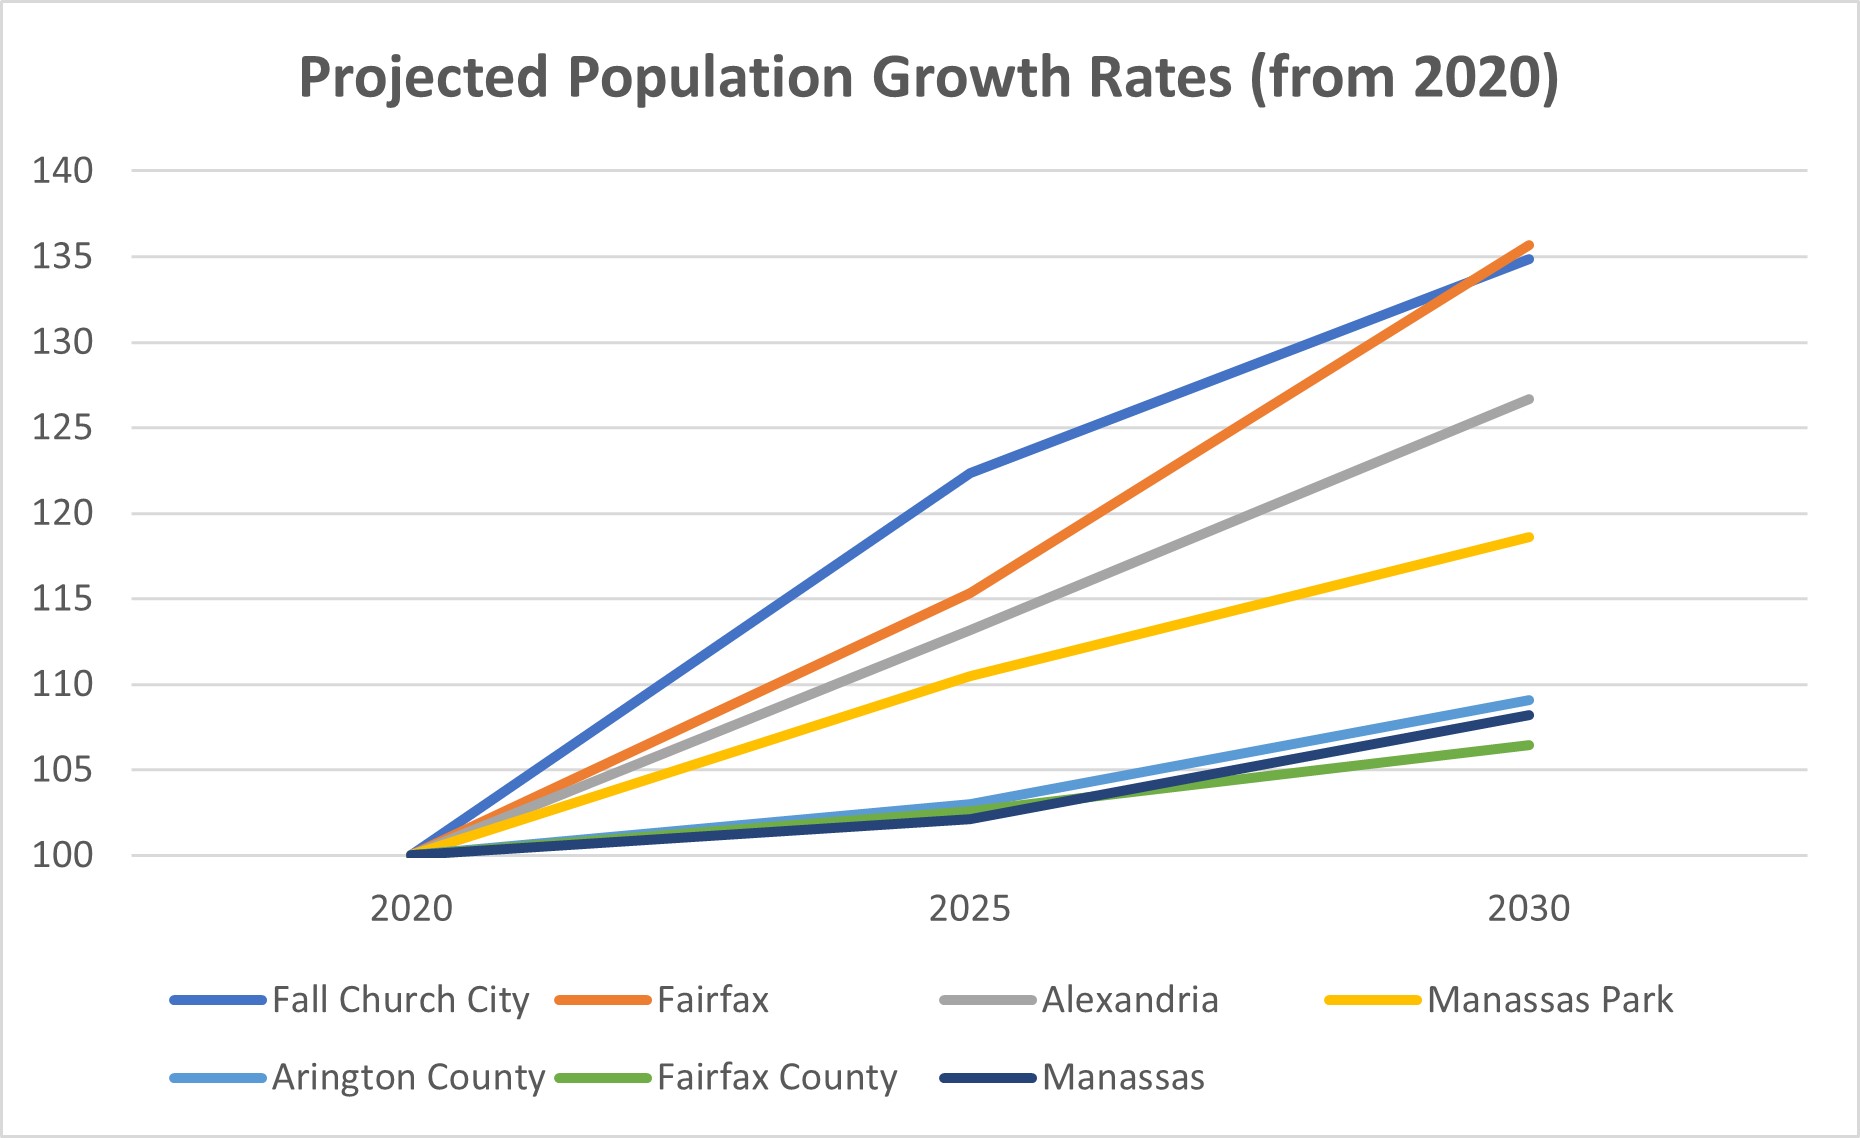 Population growth rates for N VA regions 2020-2030